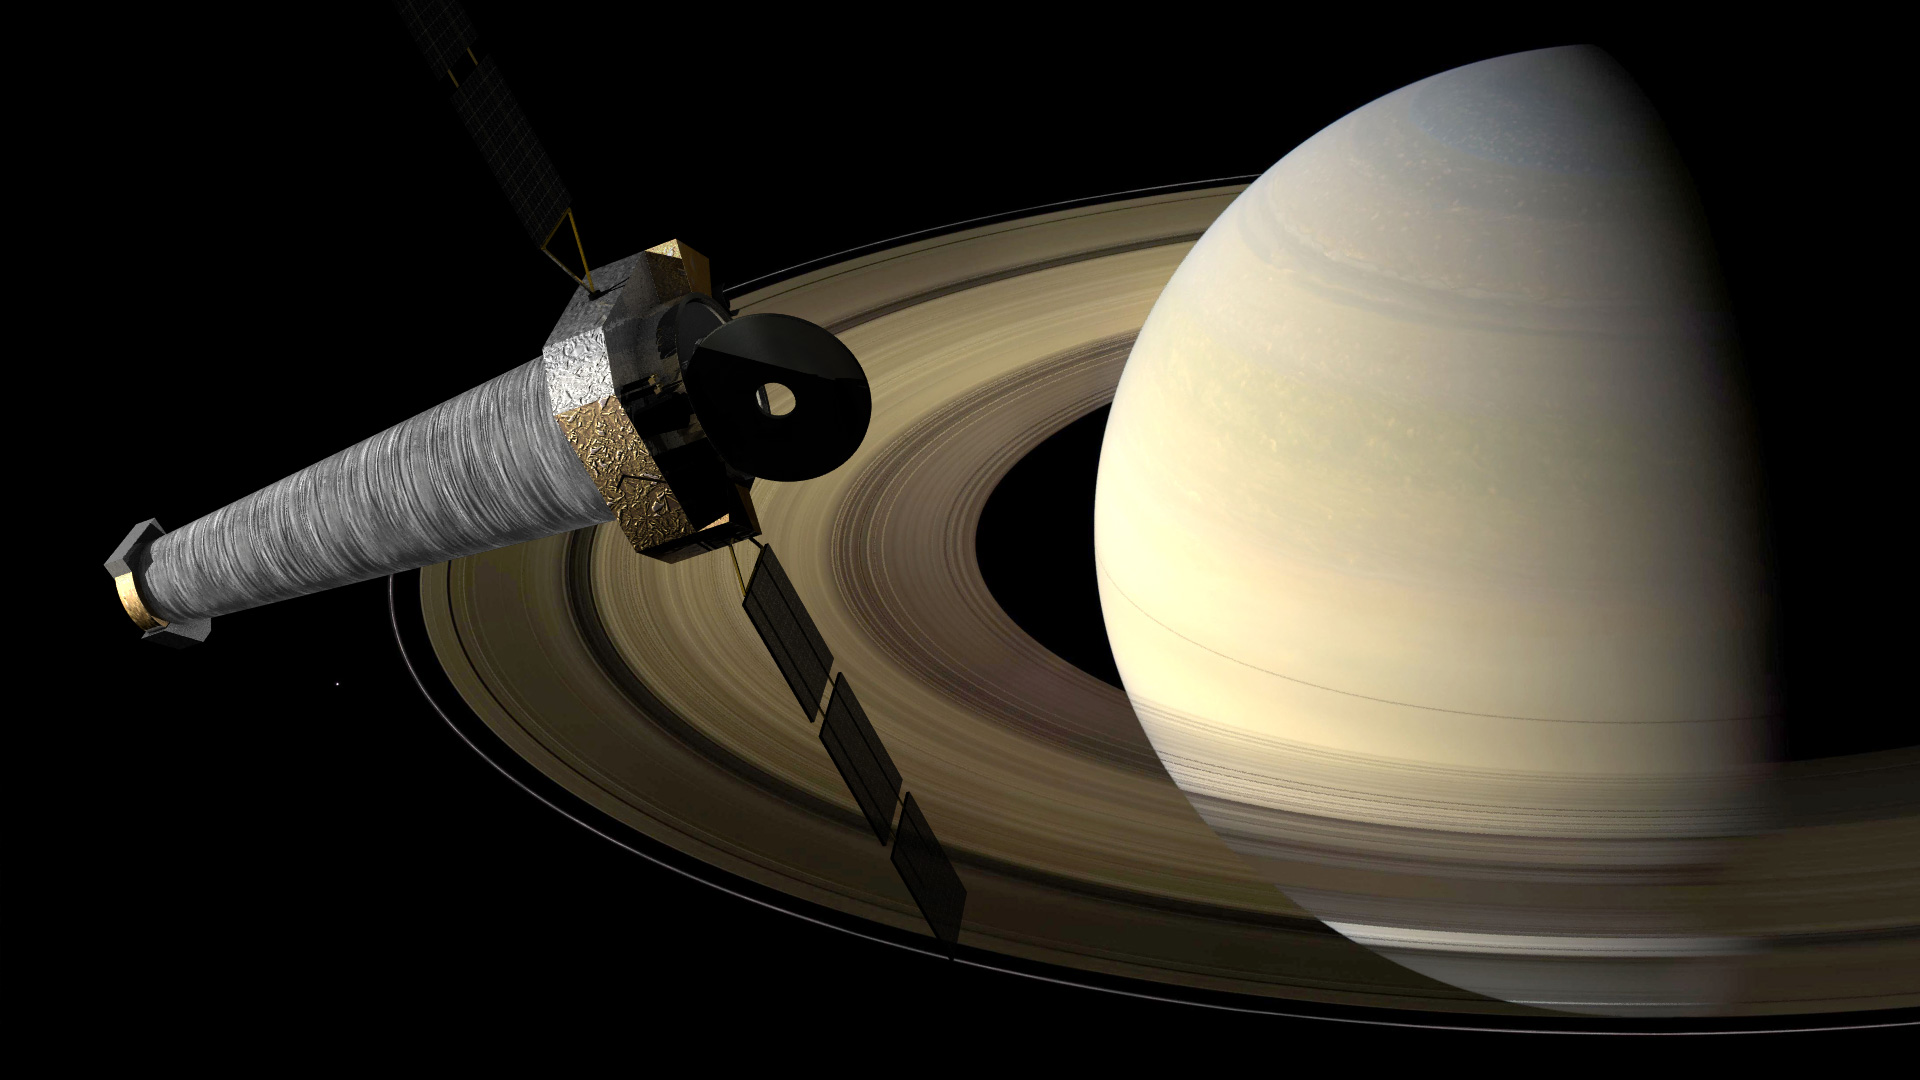 Chandra above Saturn